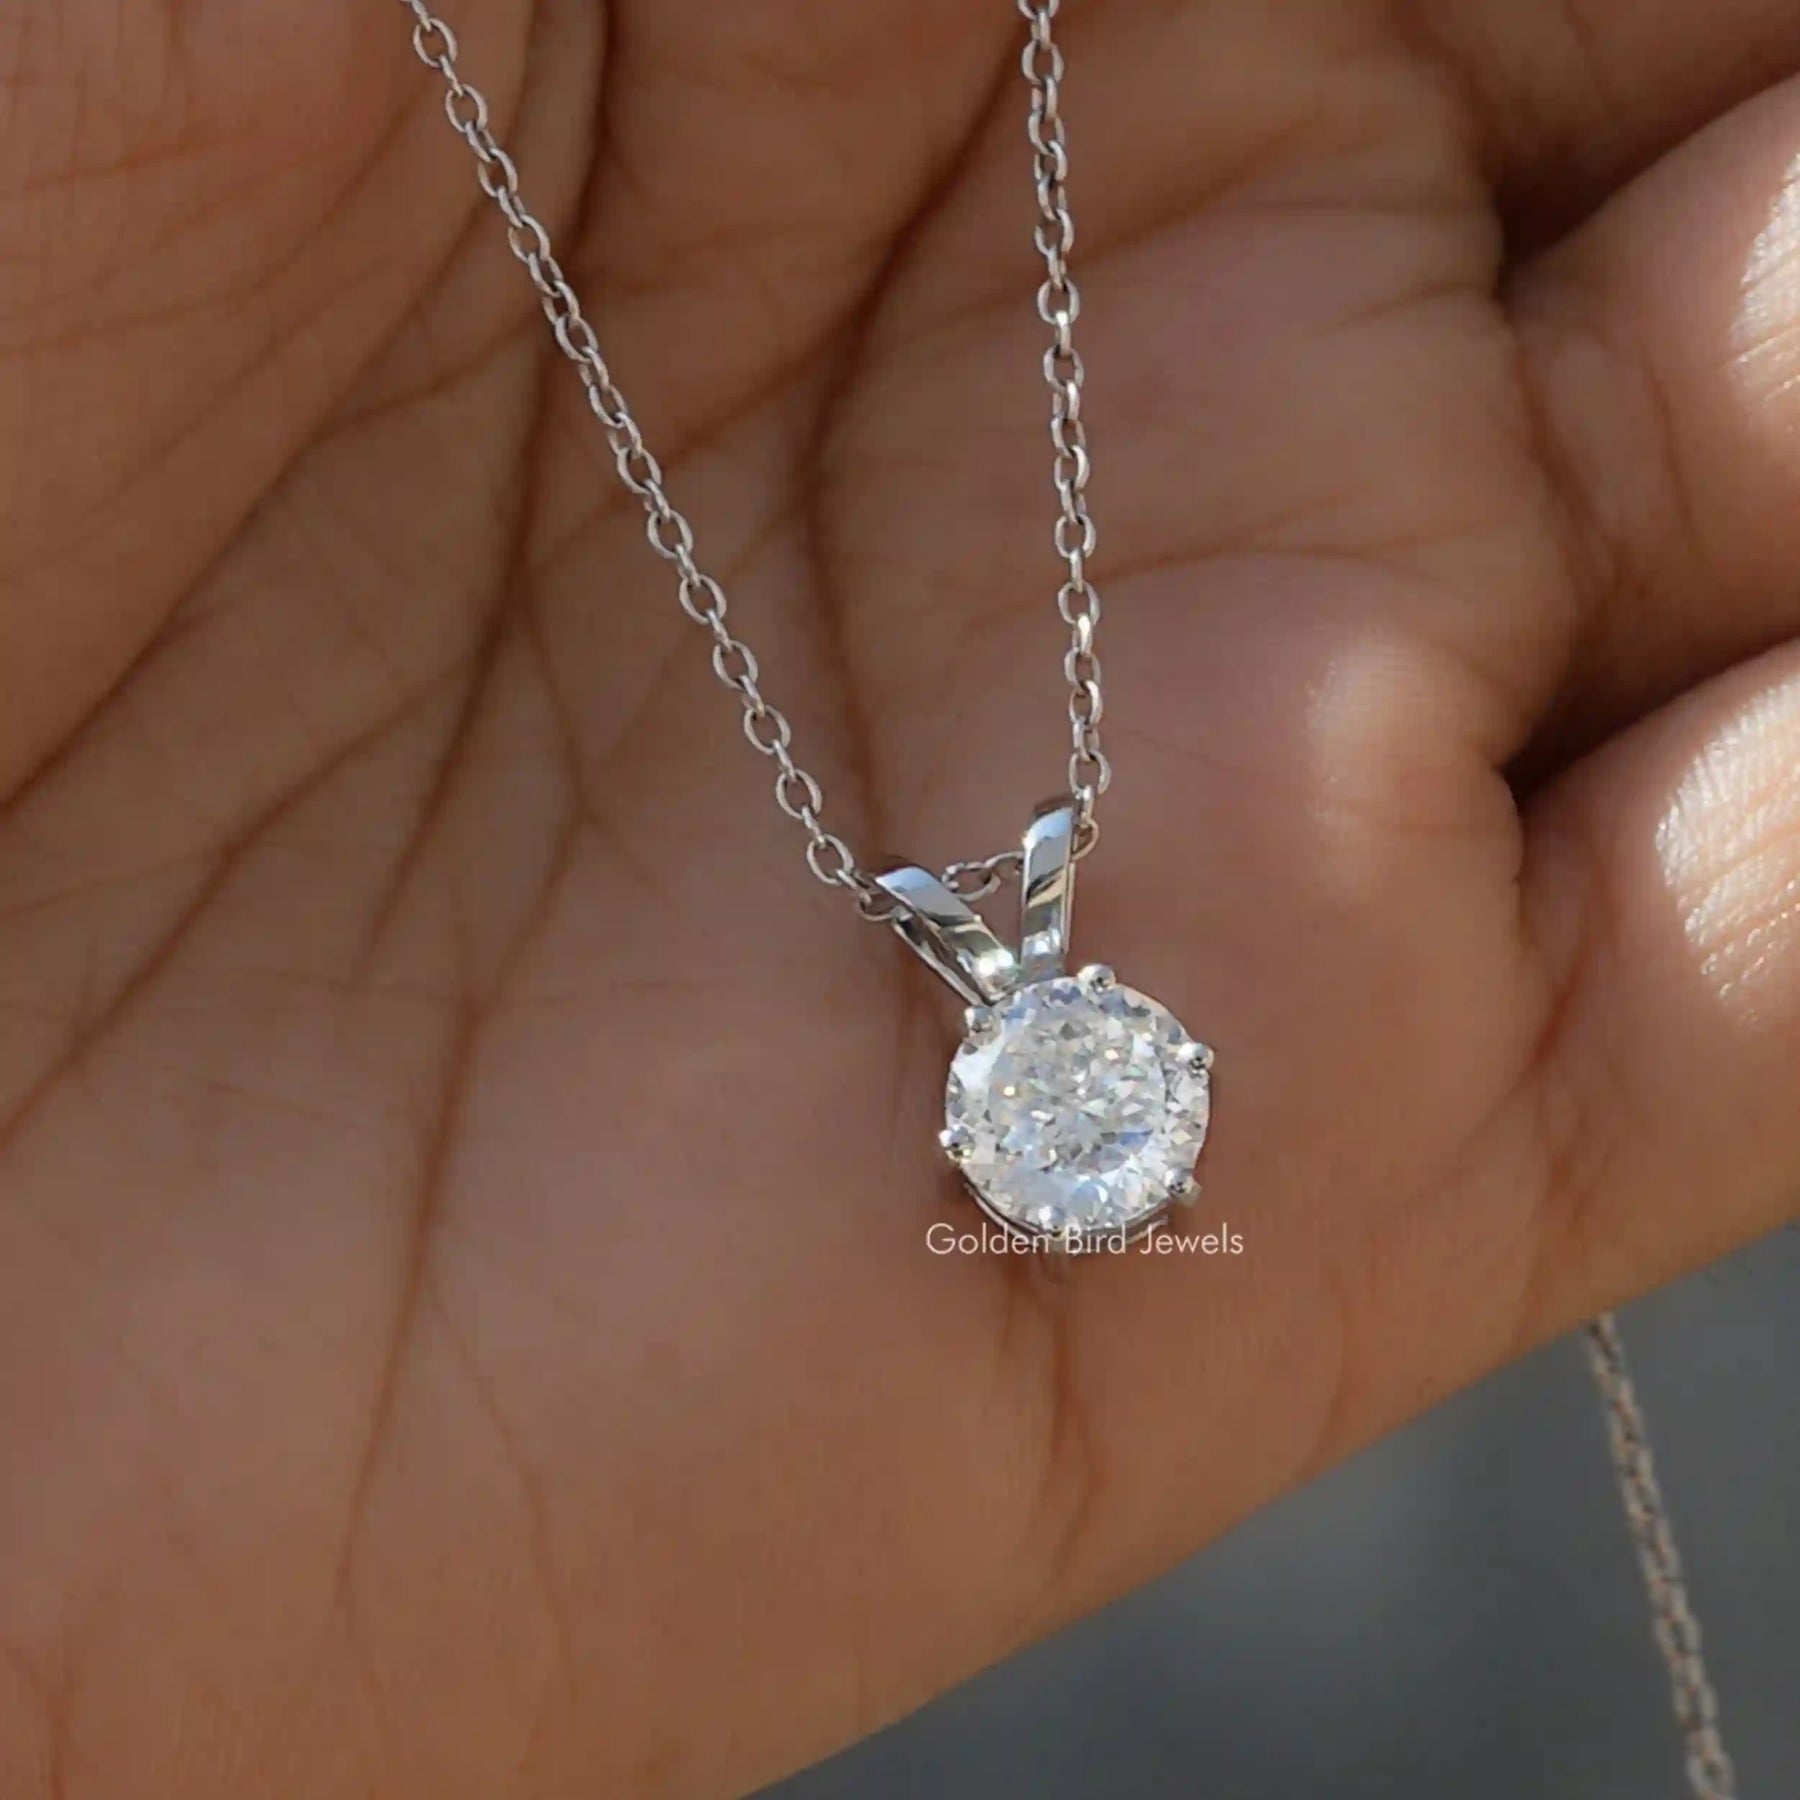 [This moissanite pendant made of 14k white gold]-[Golden Bird Jewels]